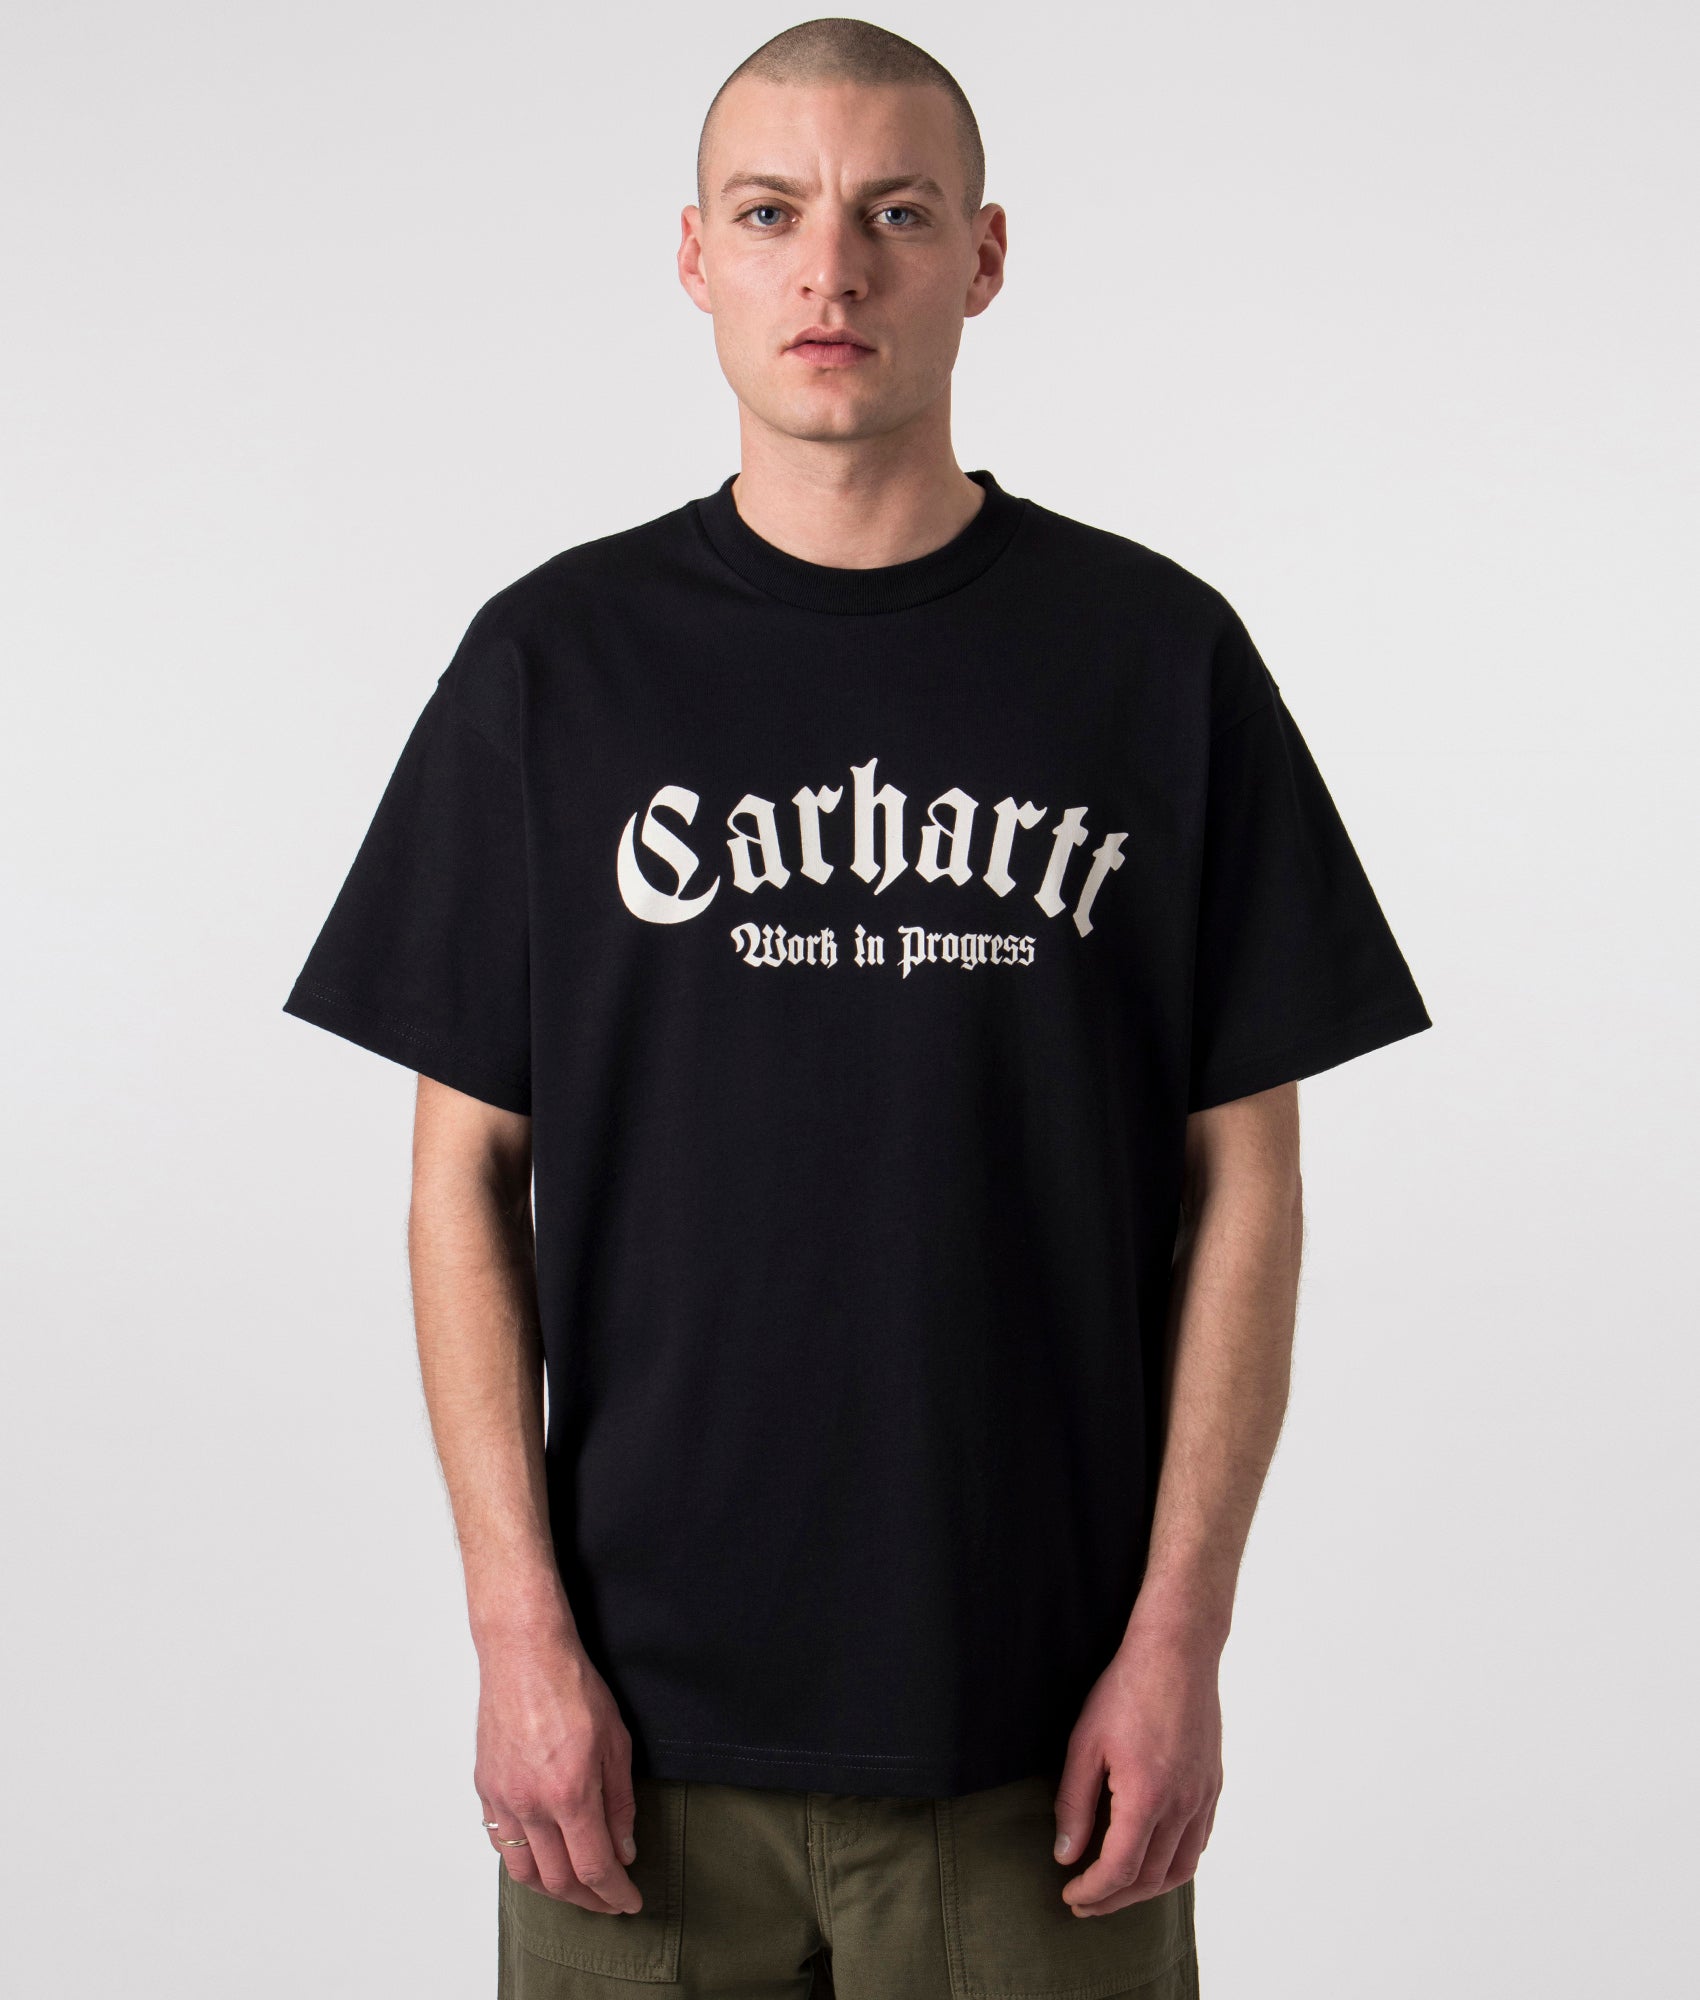 Onyx T-Shirt in Black/Wax, Carhartt WIP